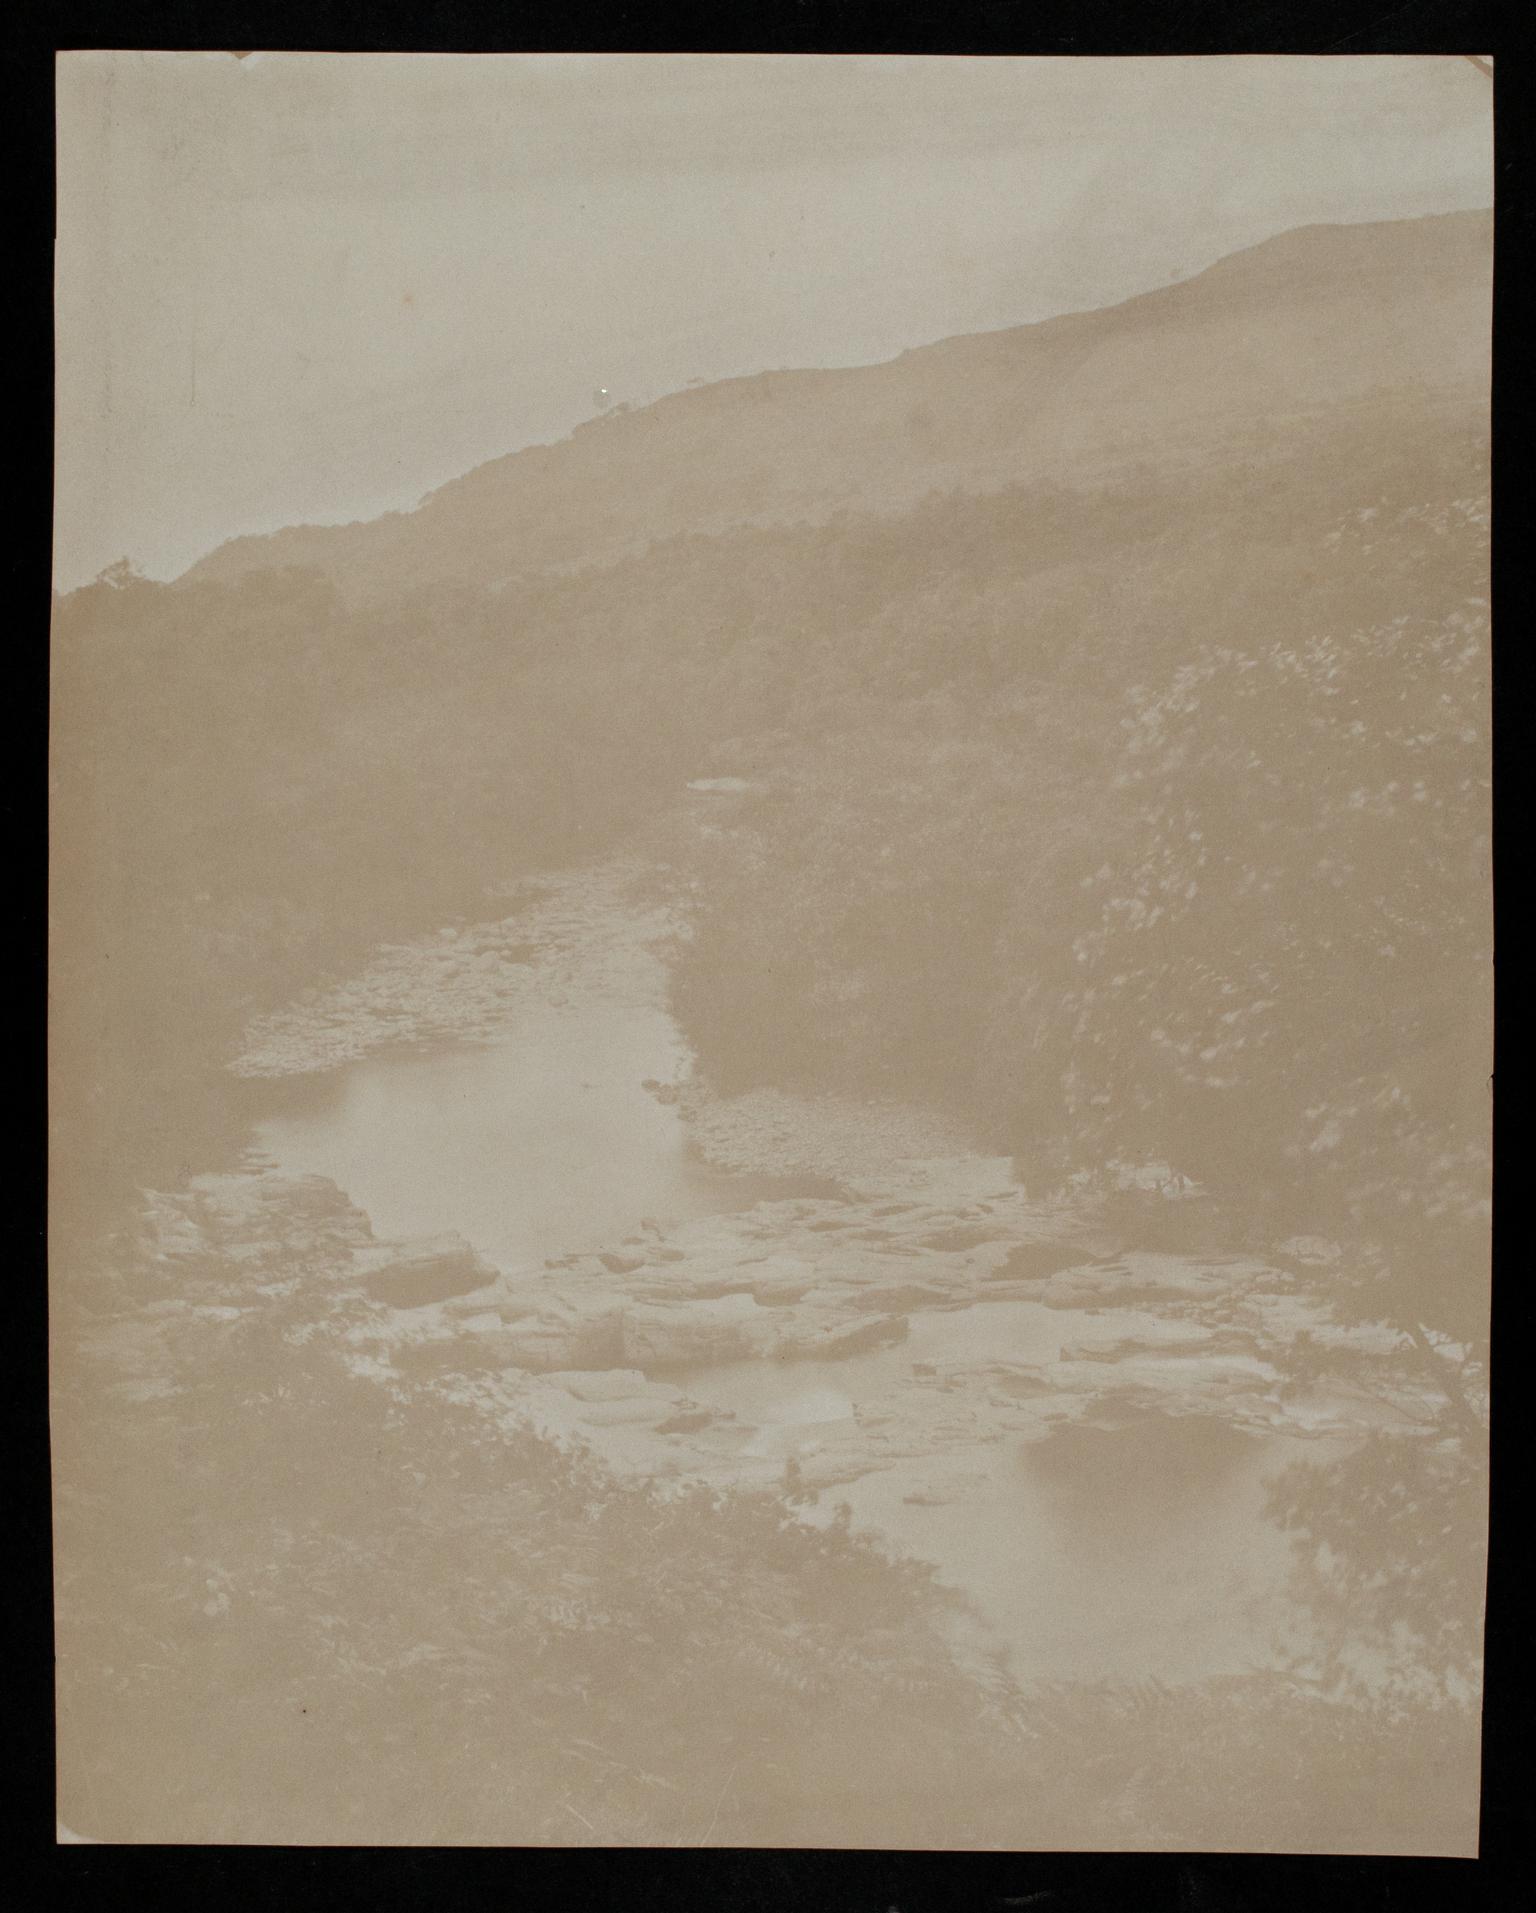 Rock strewn river, photograph